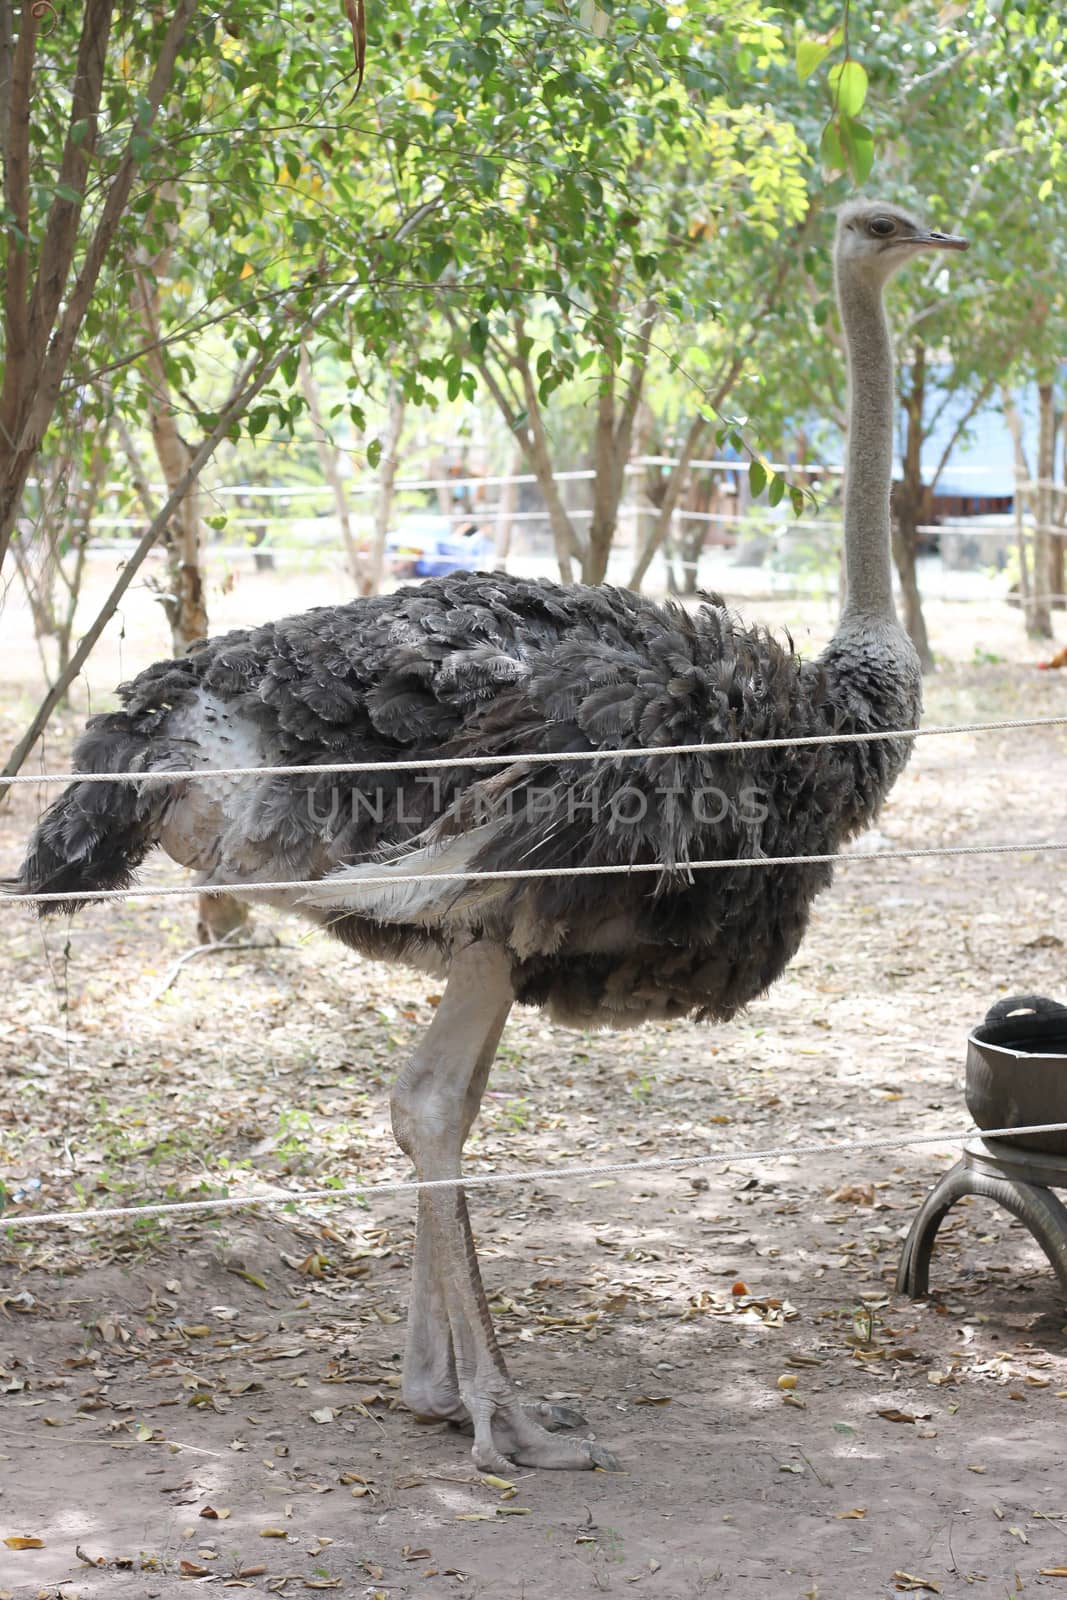 Ostrich in cage by primzrider